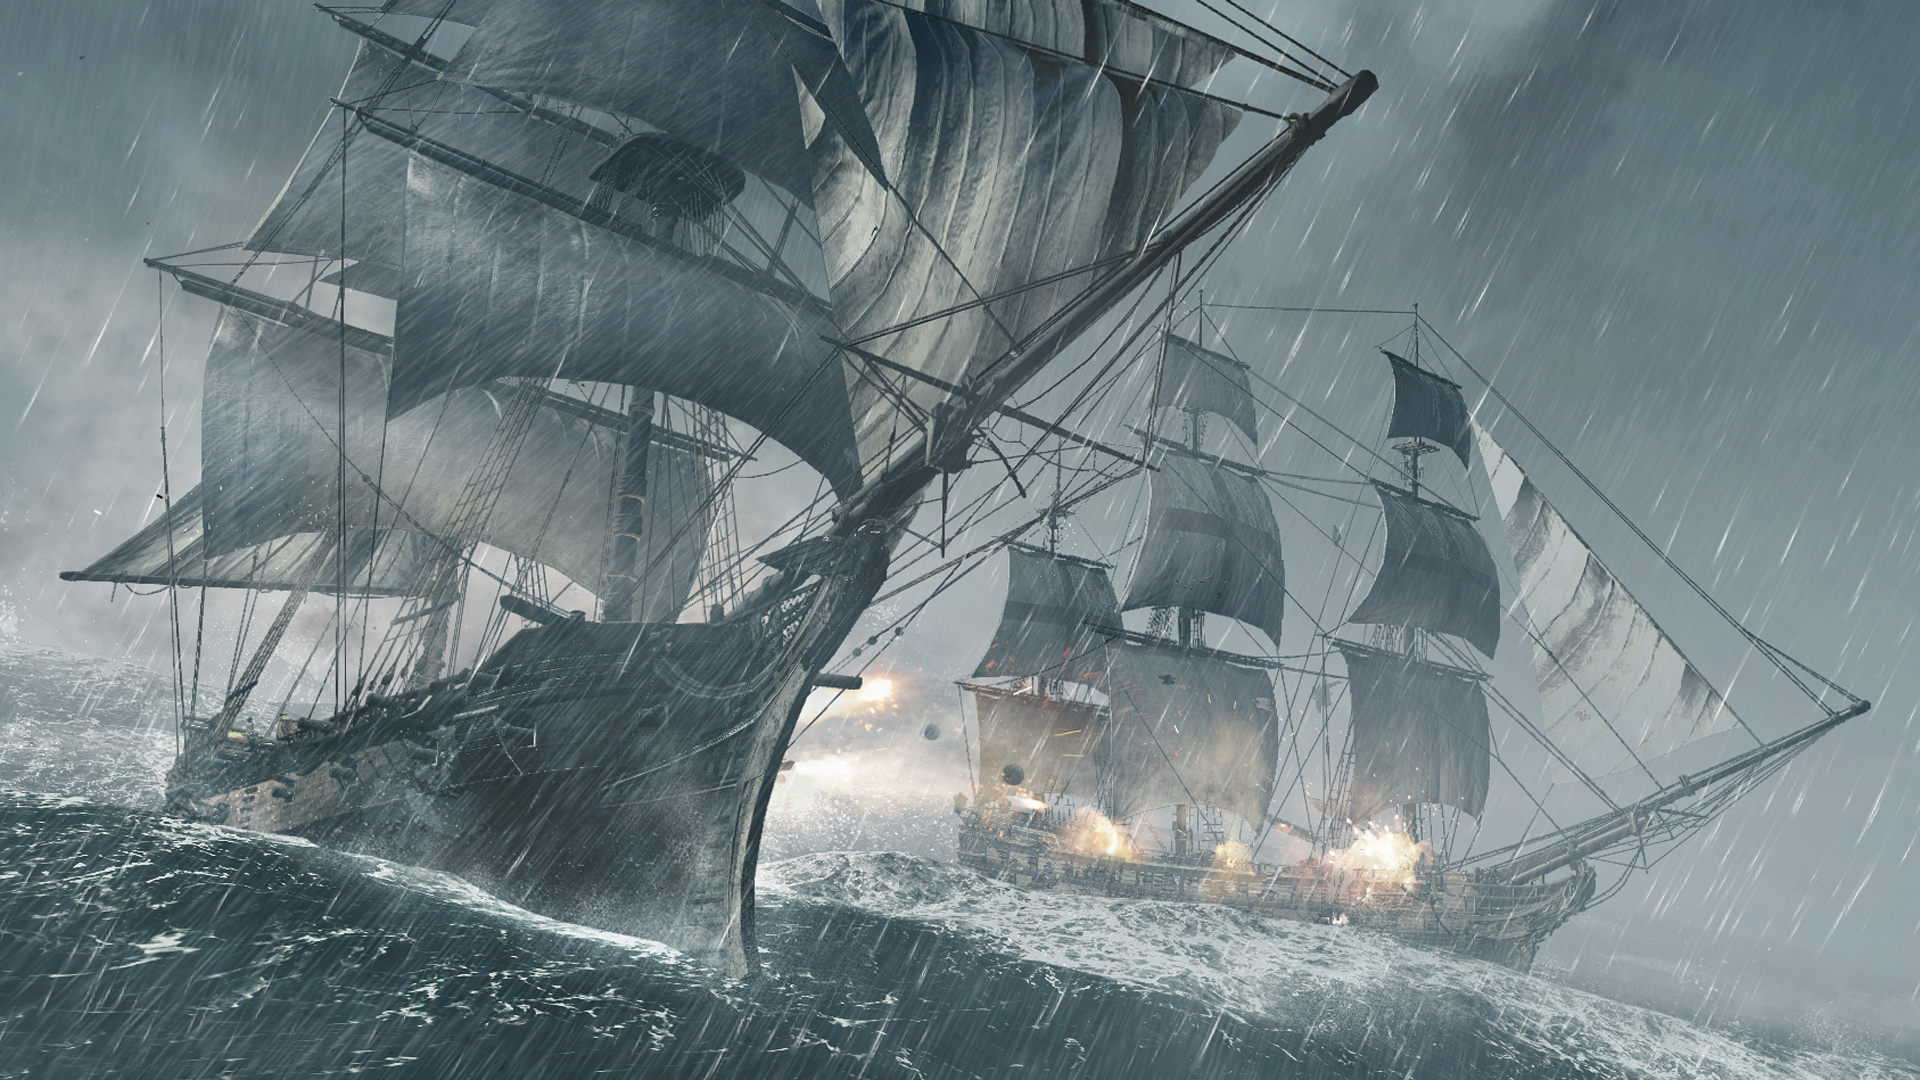 1920x1080 Assassin's Creed 4 Pirate Ships Battle Wallpaper